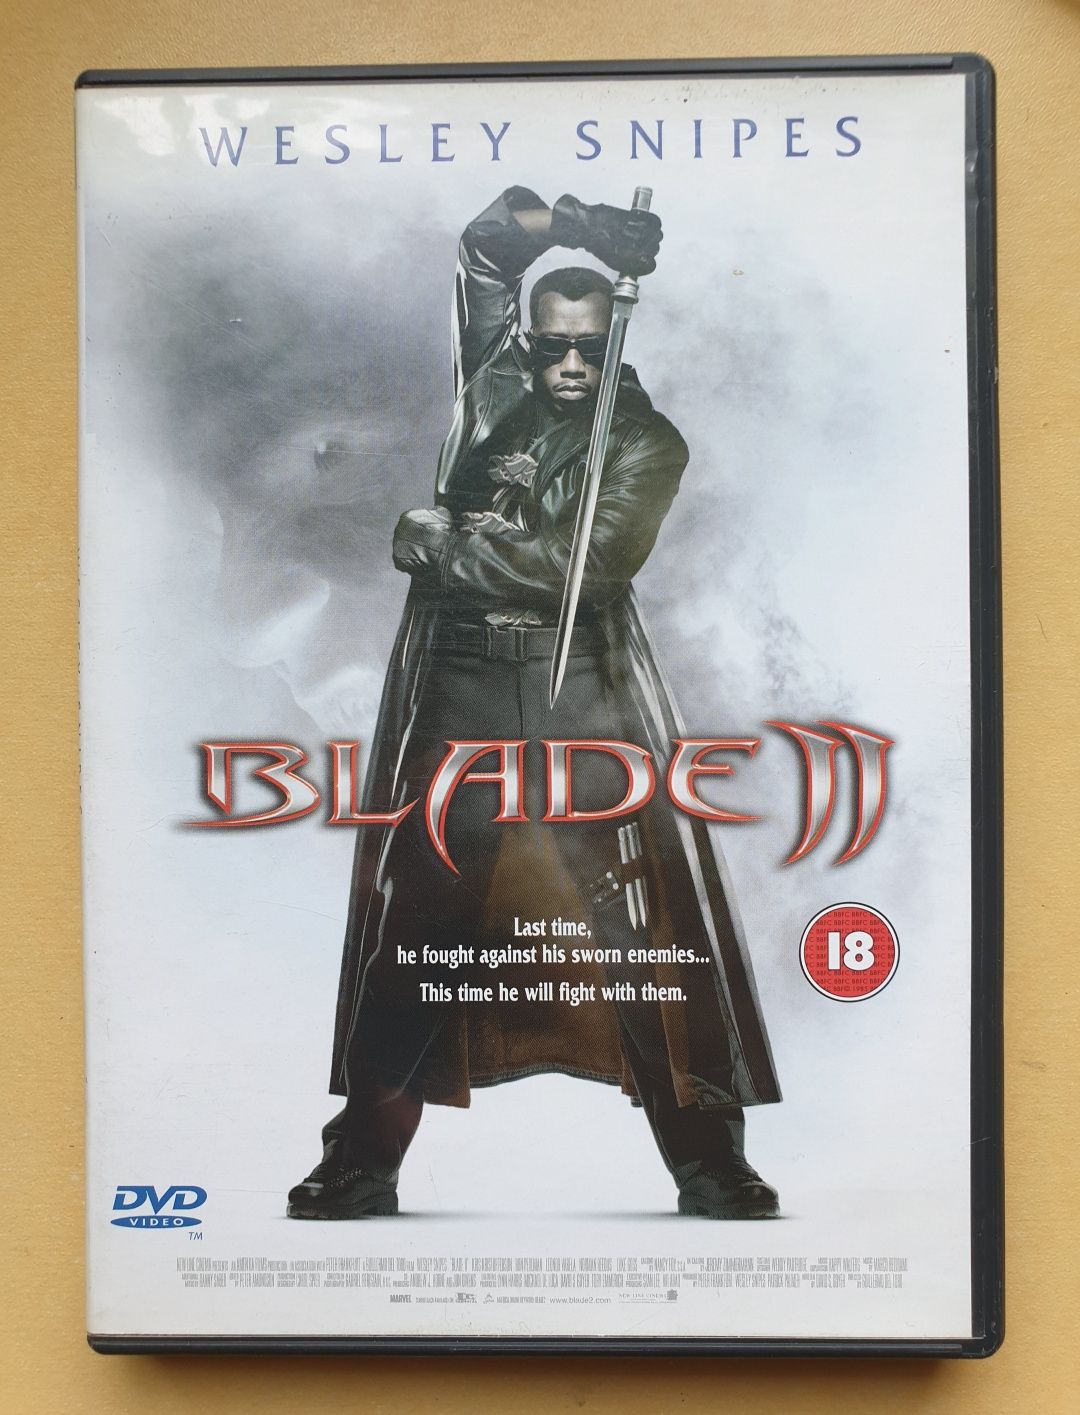 Film DVD Blade II Wesley Snipes 2 discs special editin